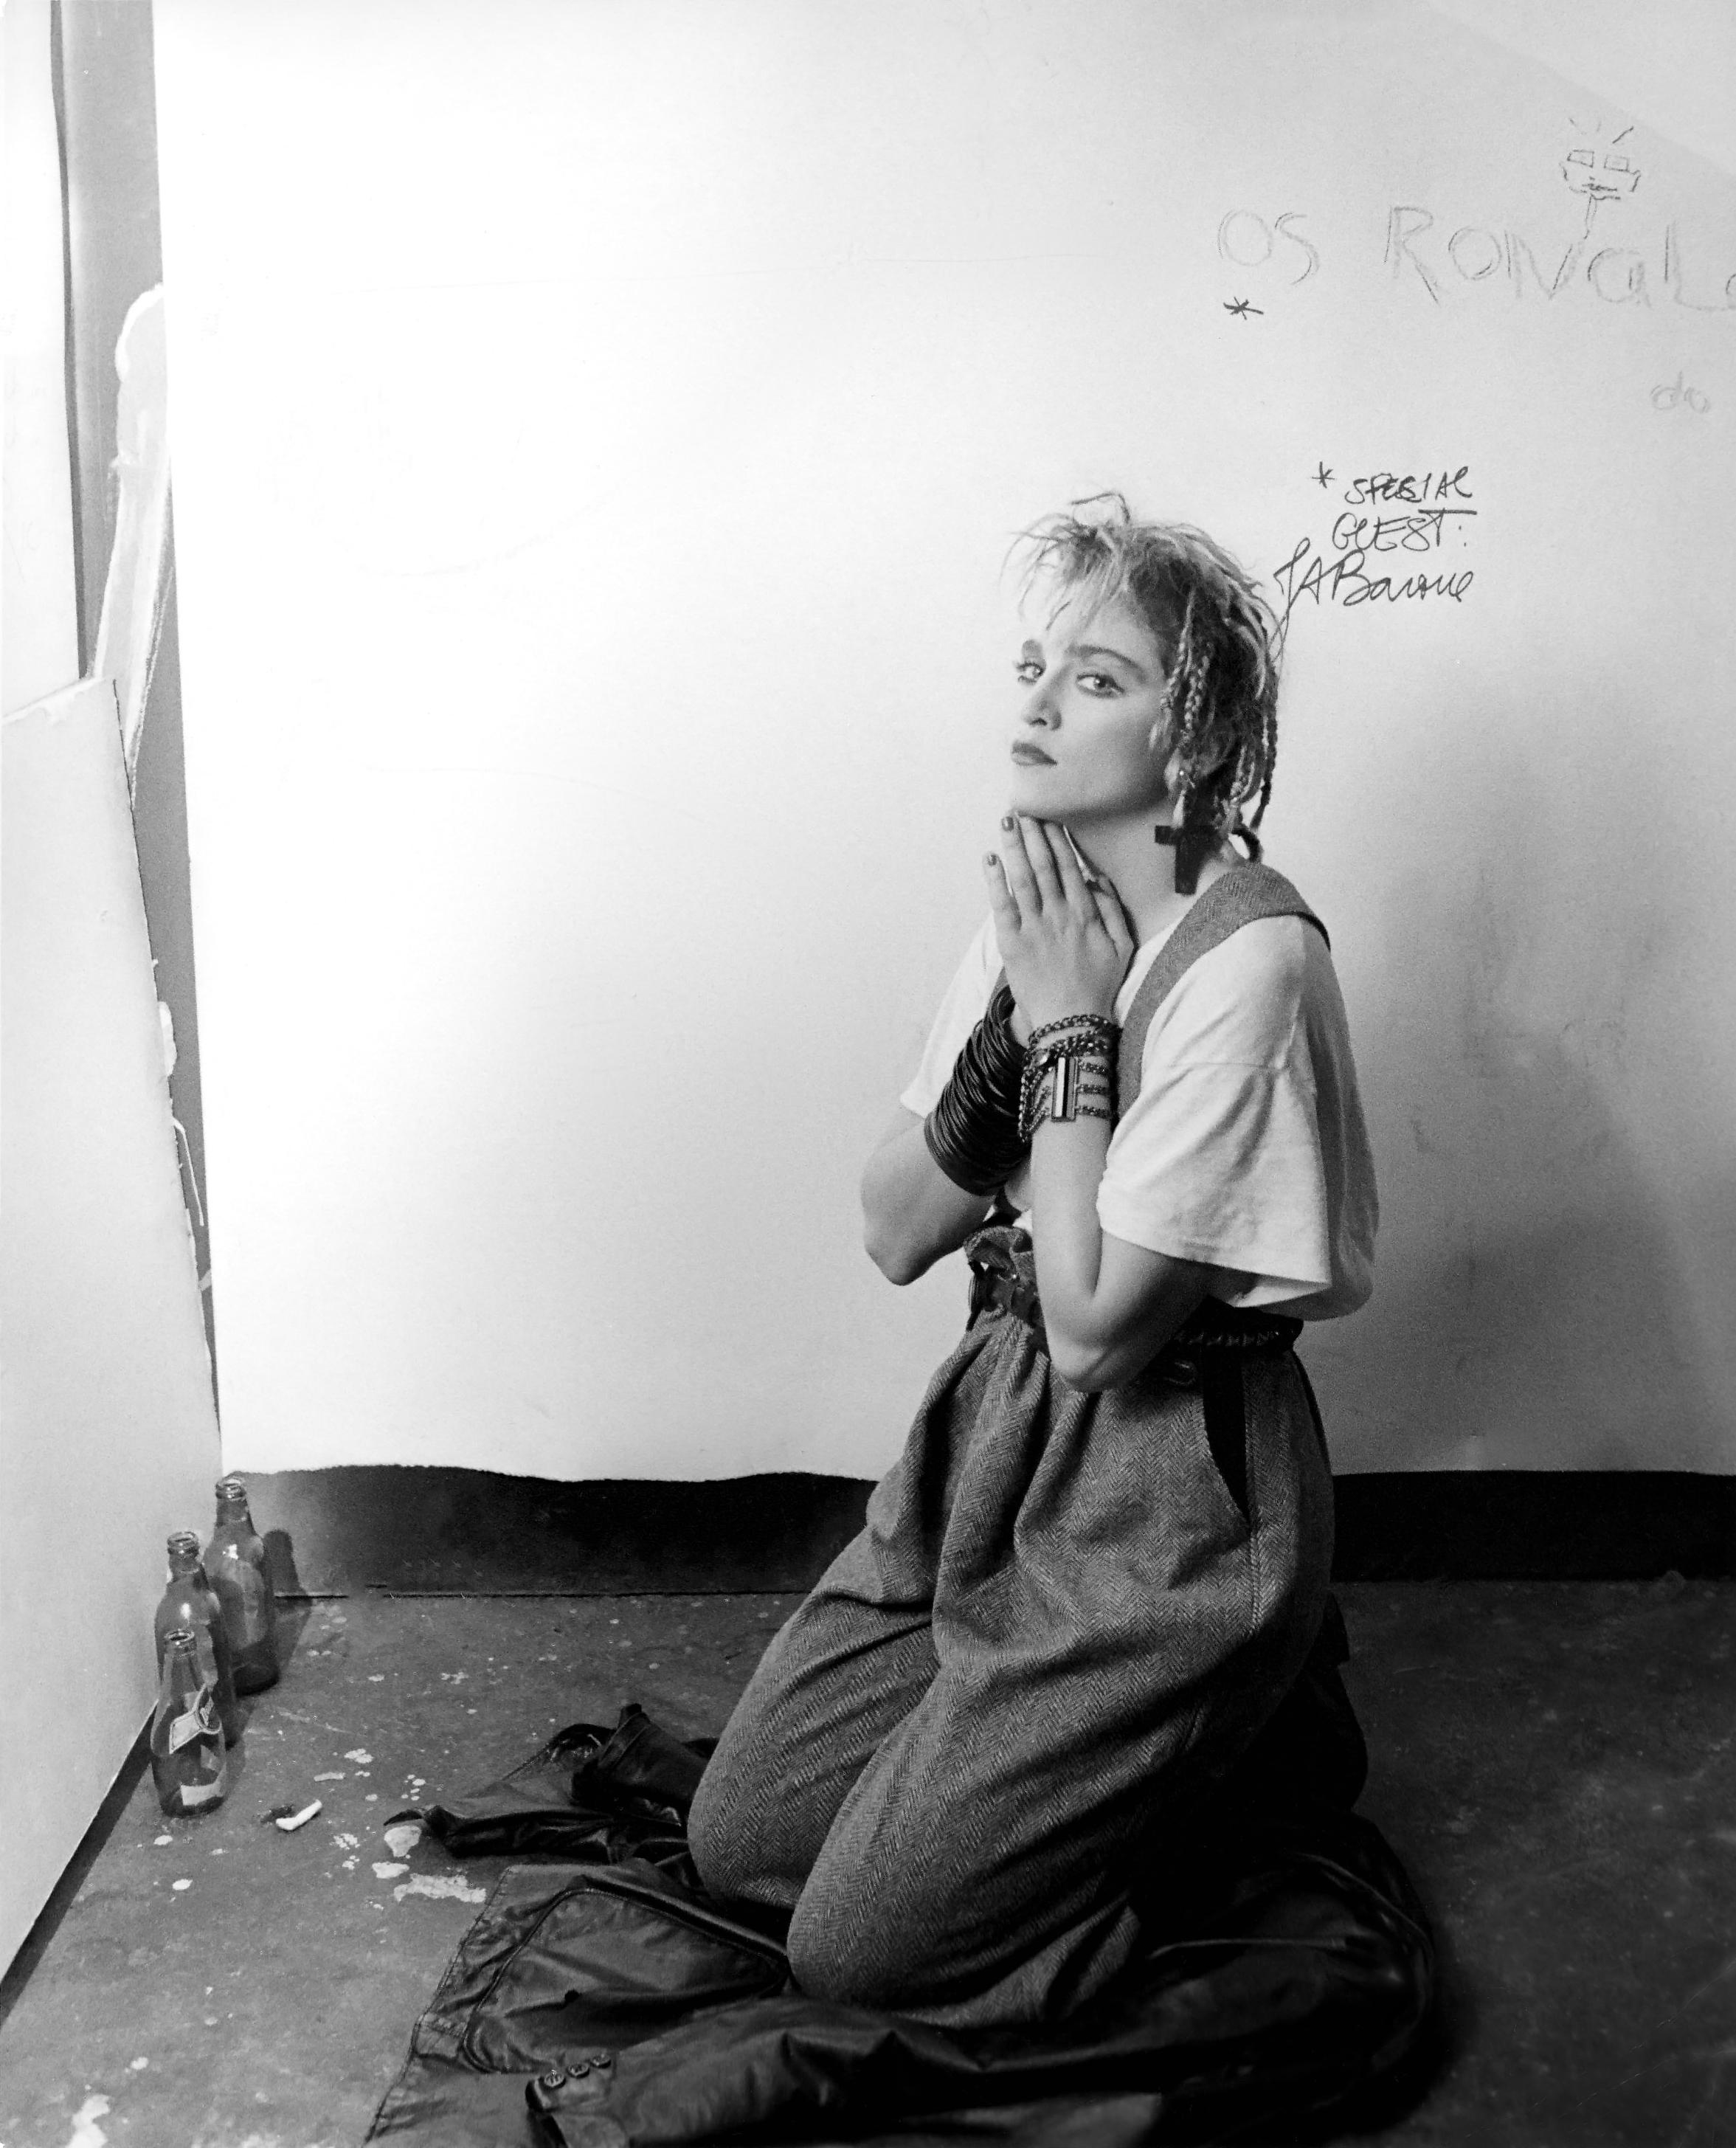 Eric Kroll Portrait Photograph - Madonna: Prayer Globe Photos Fine Art Print